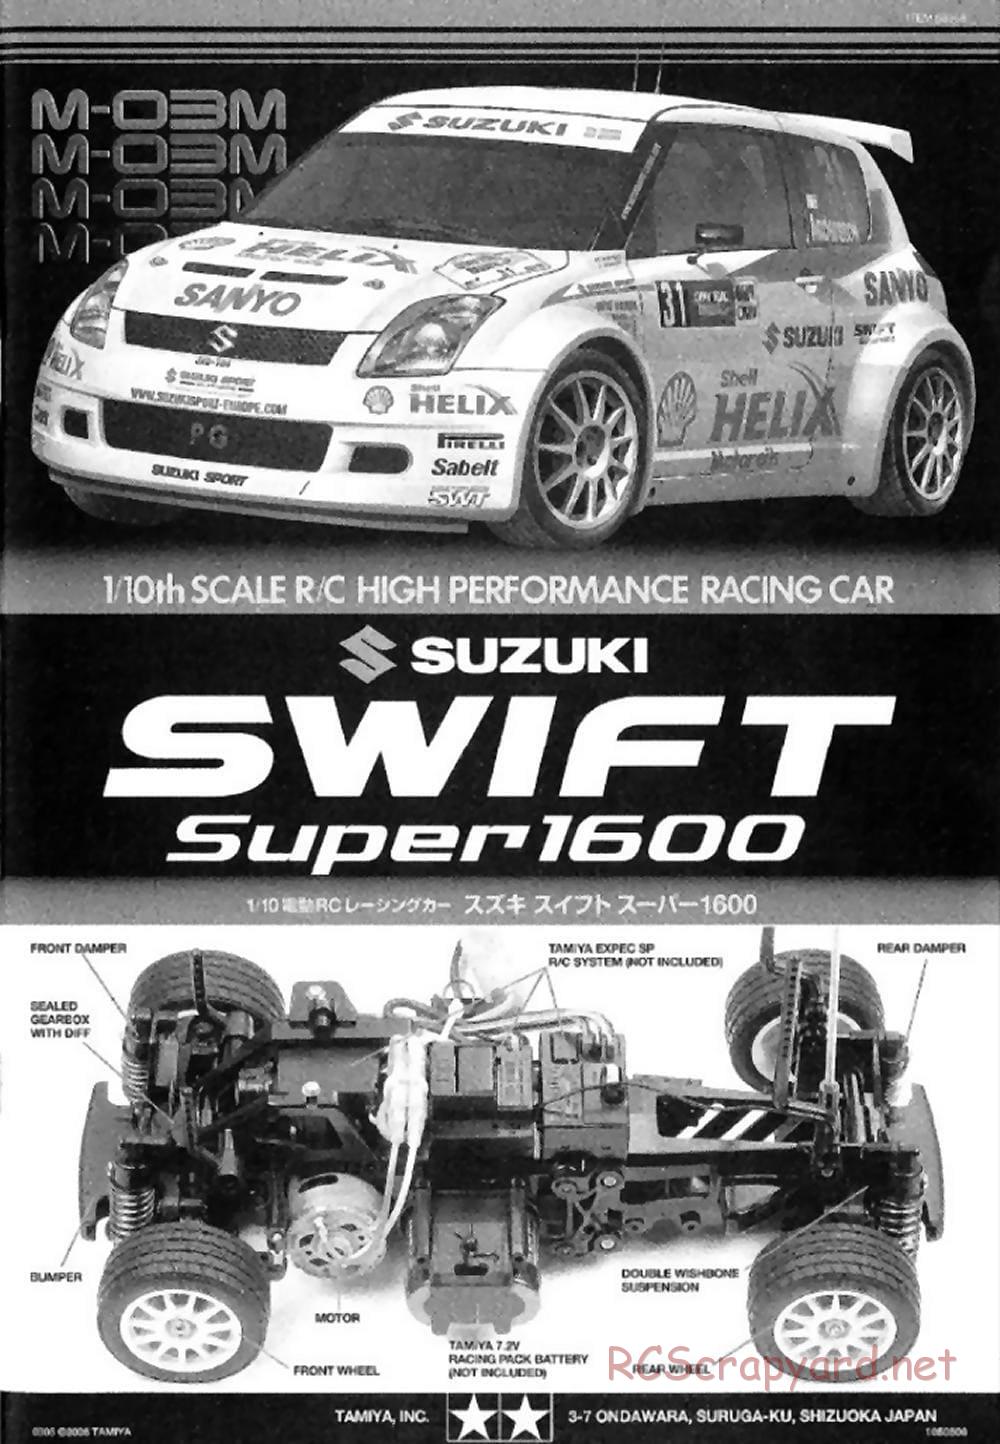 Tamiya - Suzuki Swift Super 1600 - M03M Chassis - Manual - Page 1